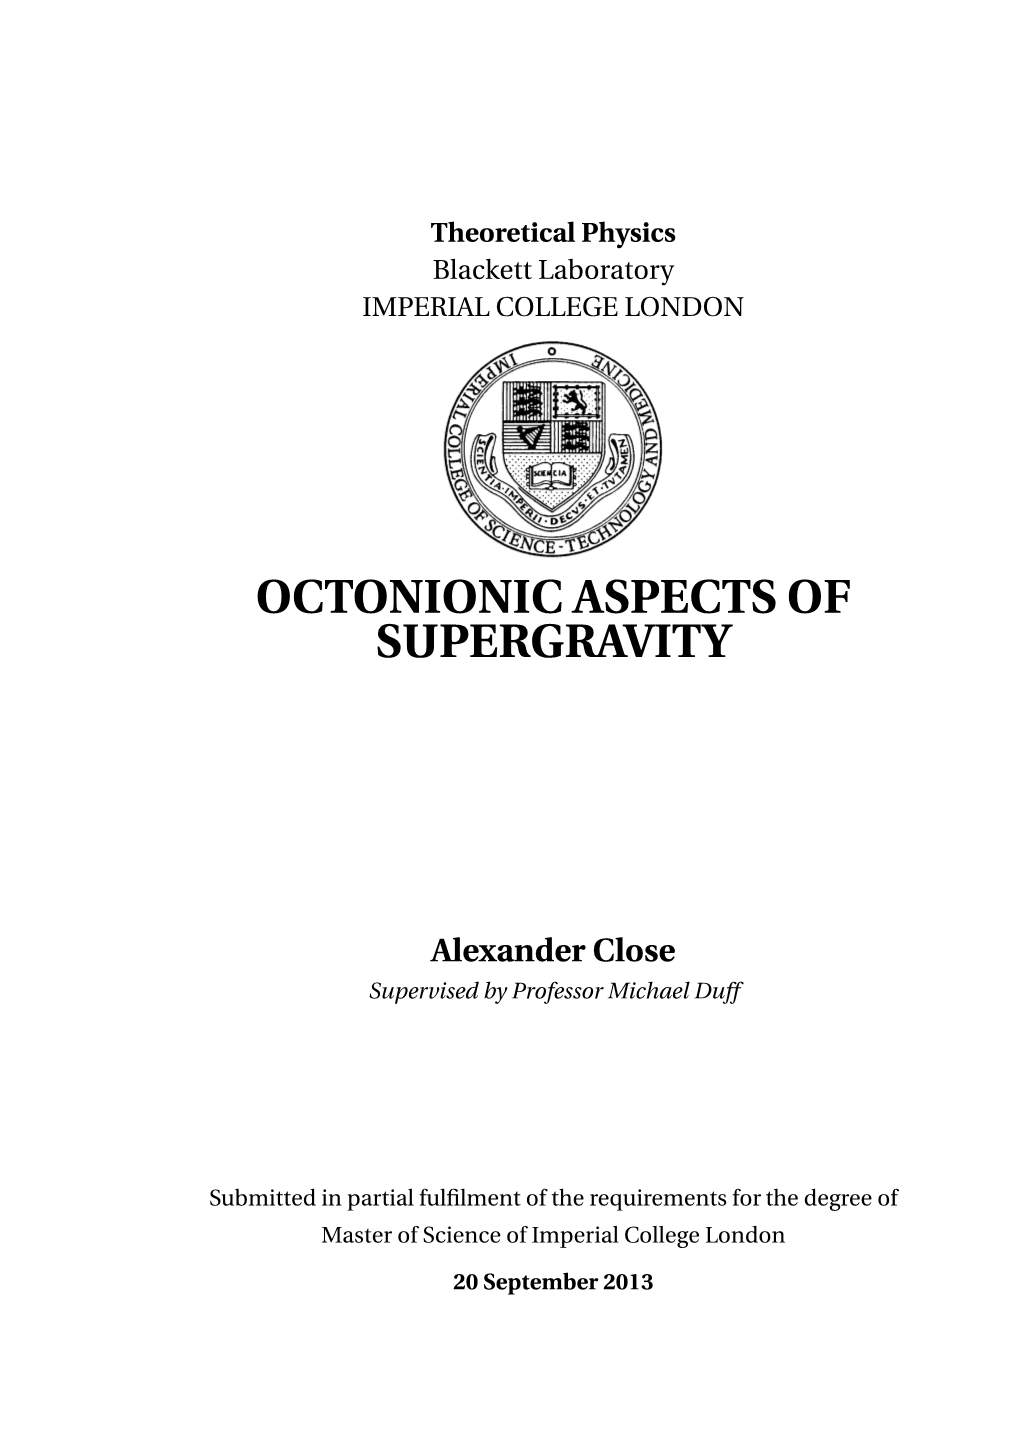 Octonionic Aspects of Supergravity